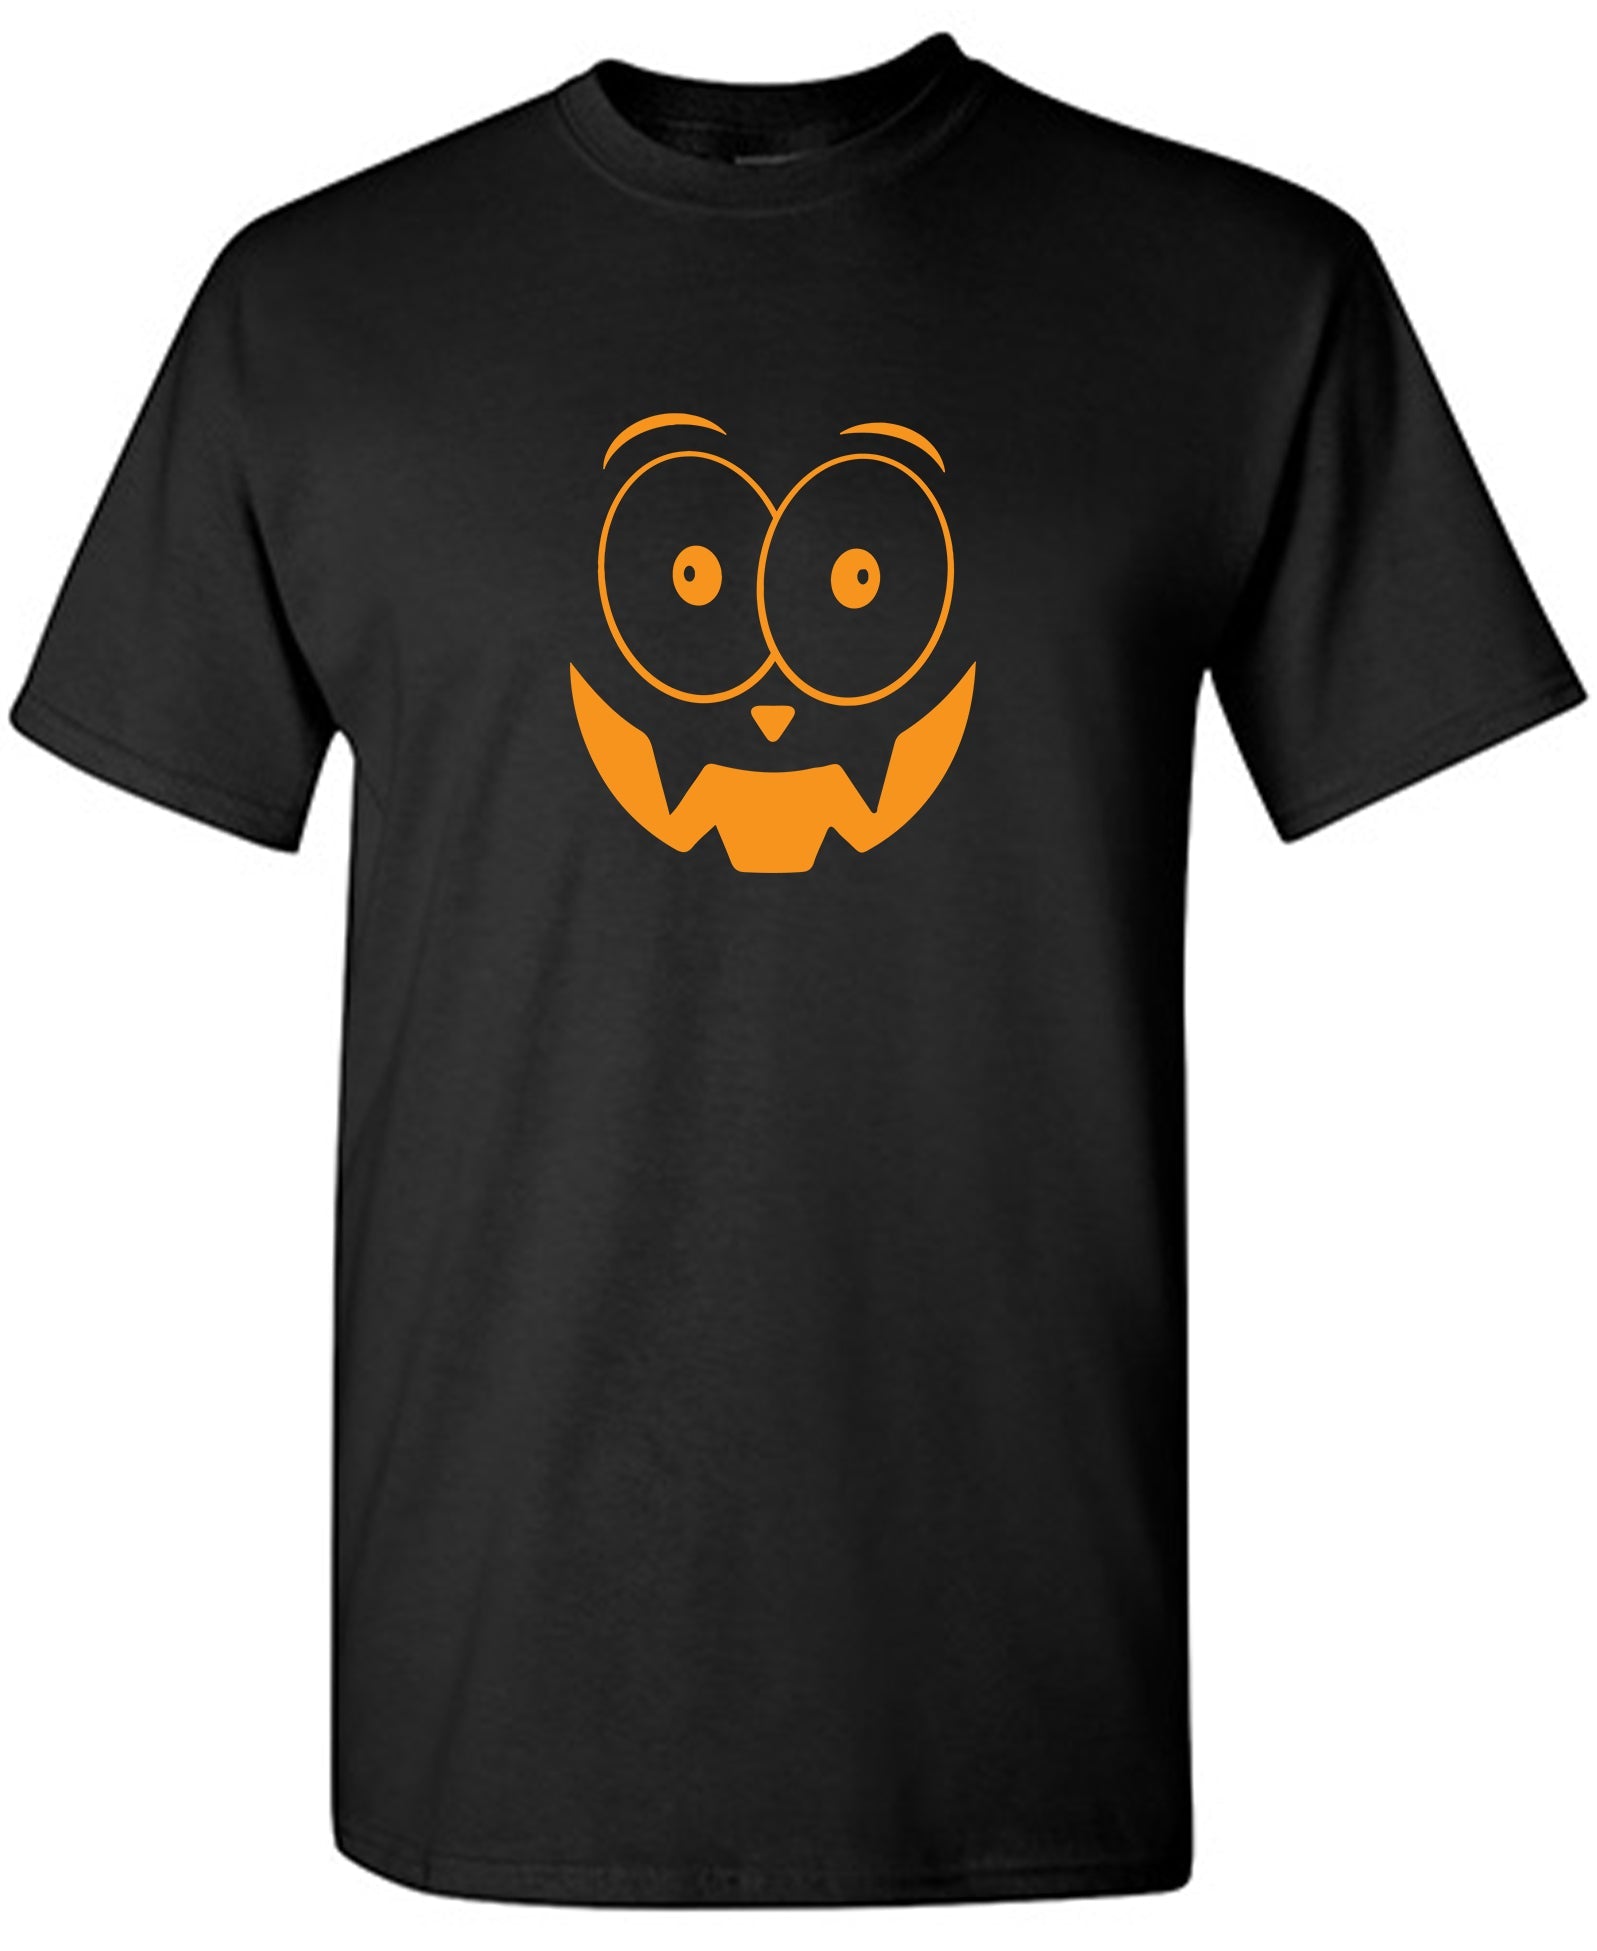 Pumpkin Big Eyes T Shirt - Funny Graphic T Shirts